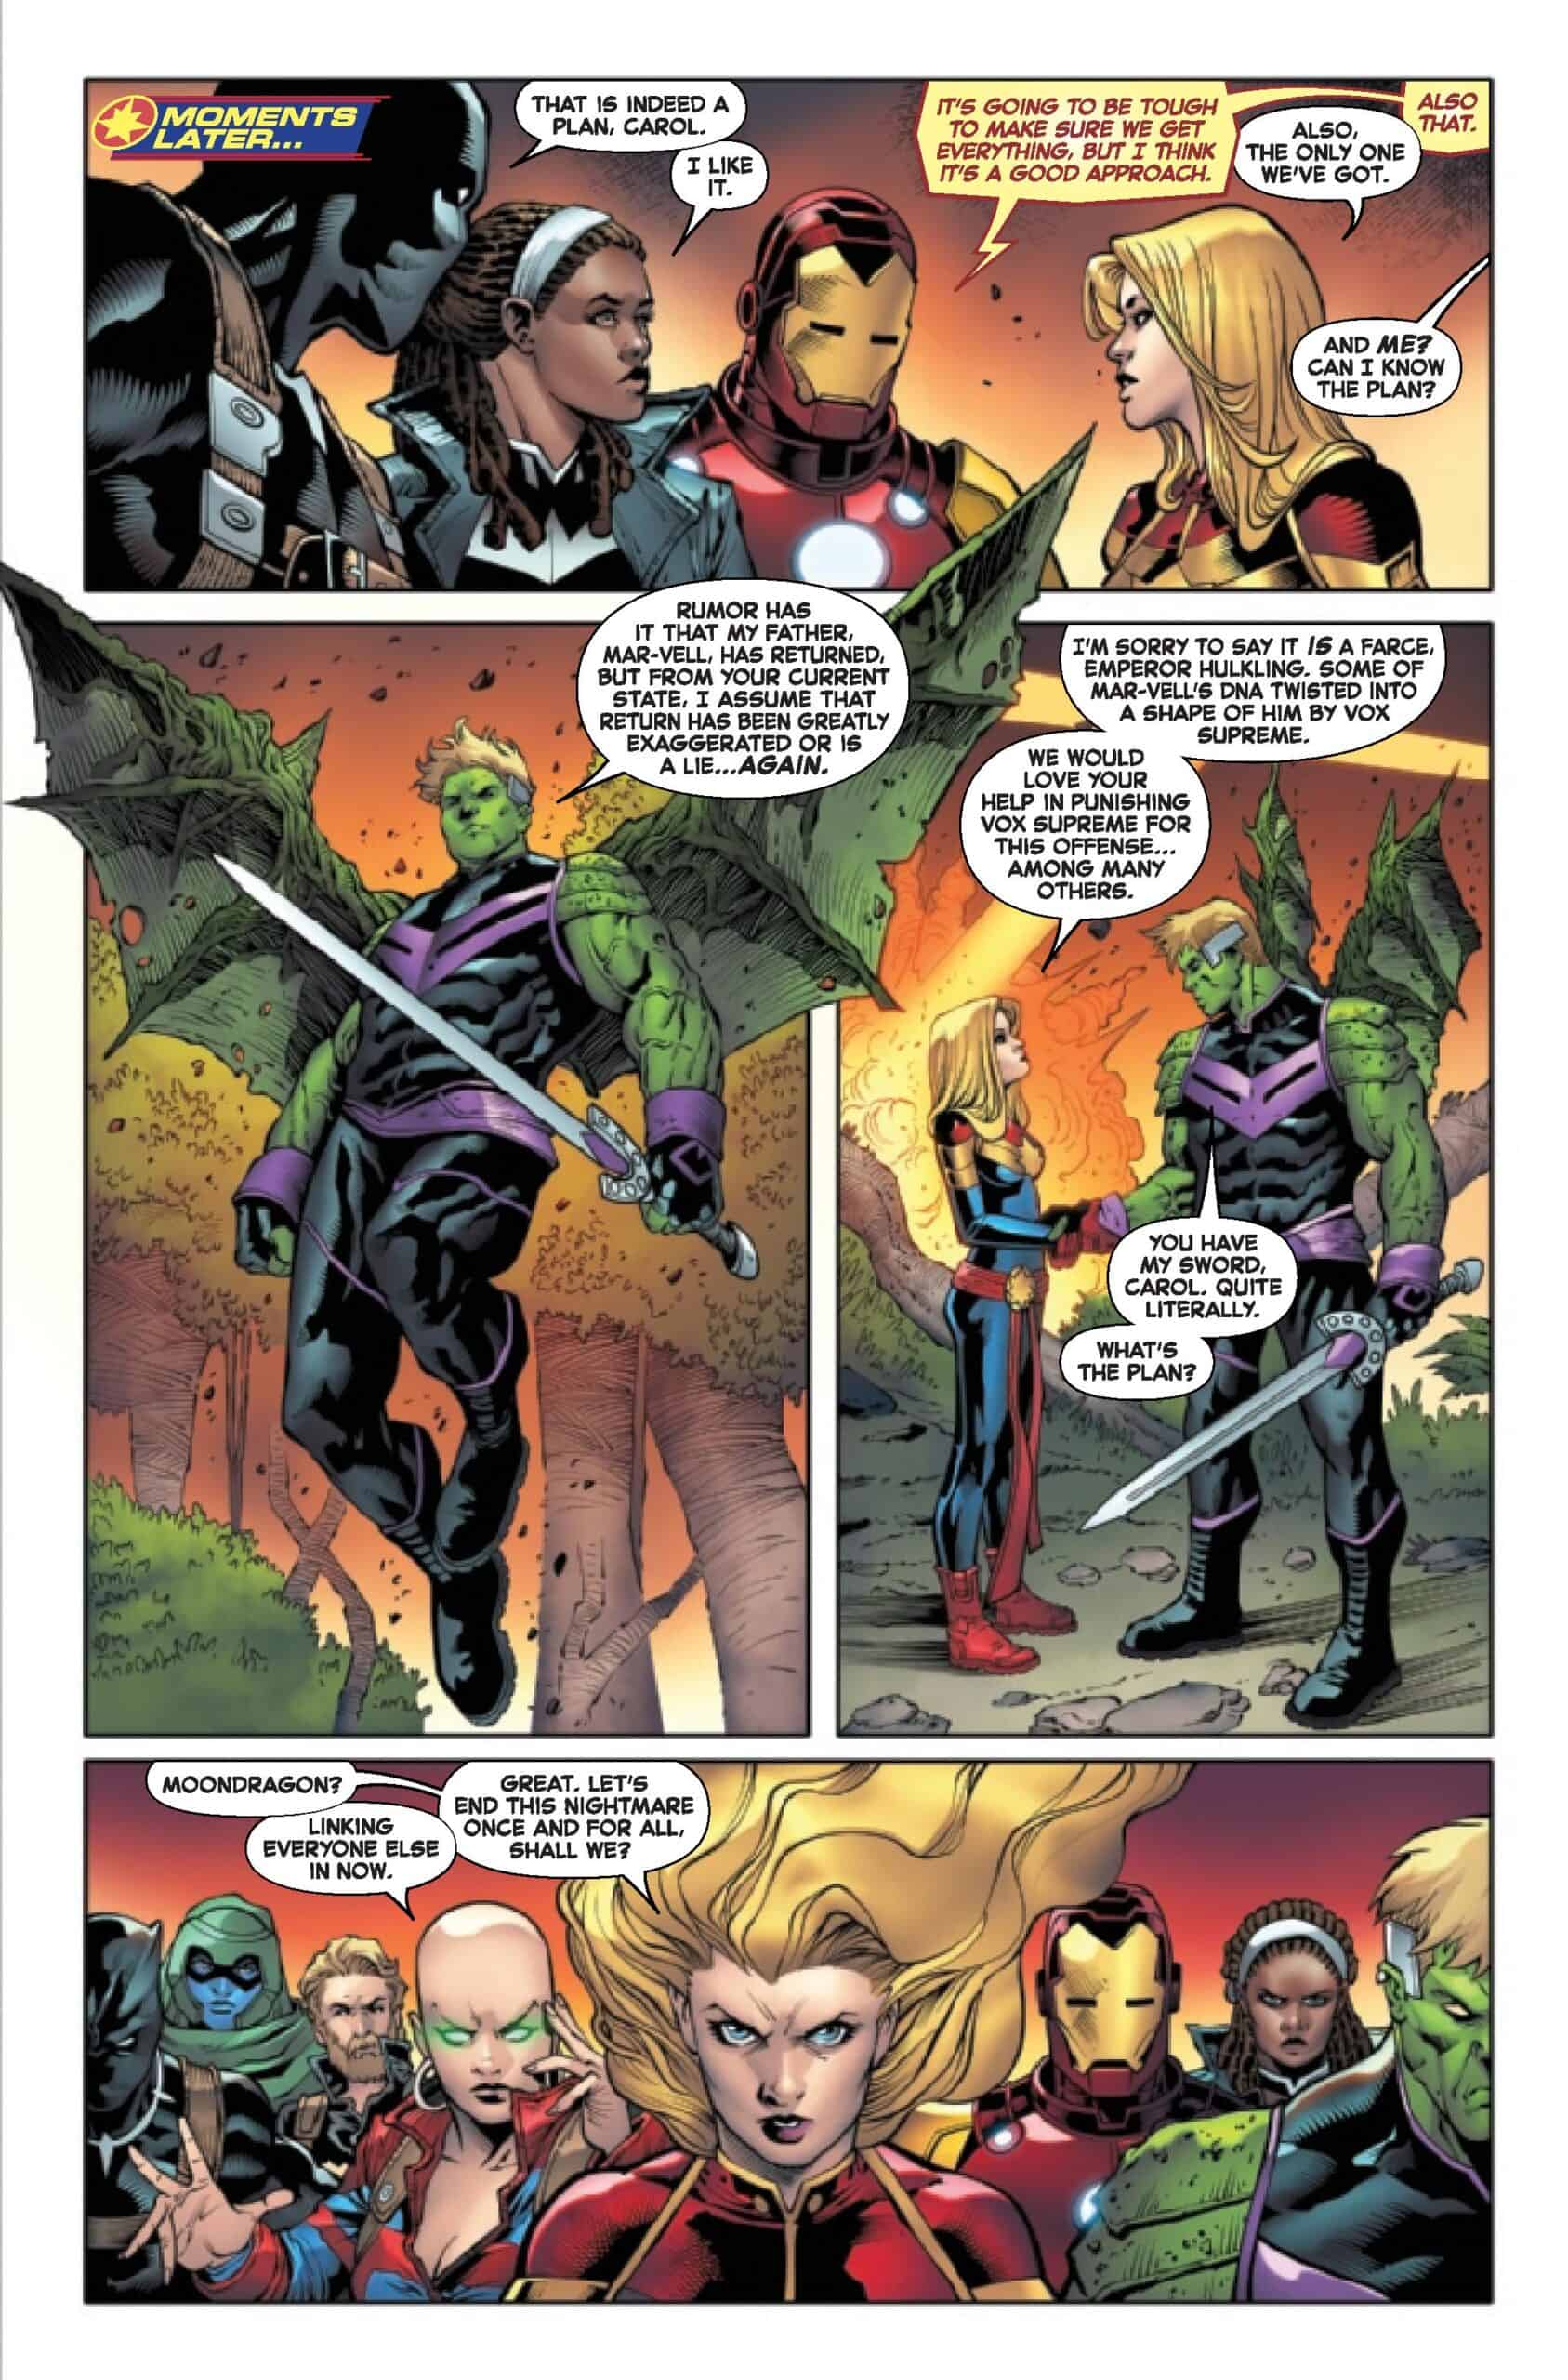 EXCLUSIVE SNEAK PEEK: Preview of Marvel's CAPTAIN MARVEL #36